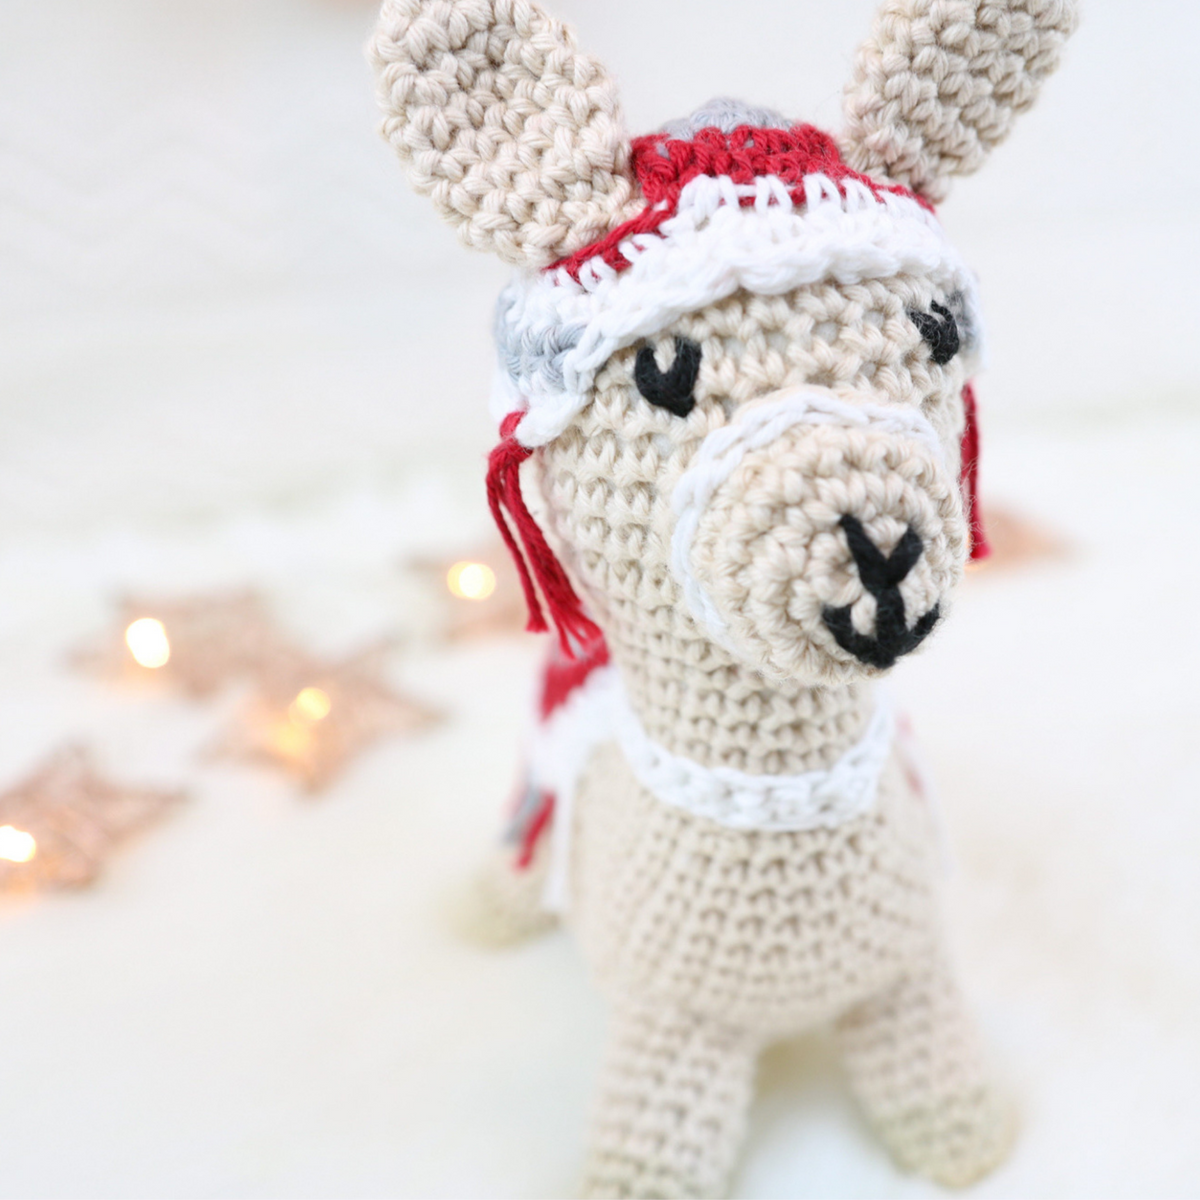 Machi the Llama Kids Crochet Toy